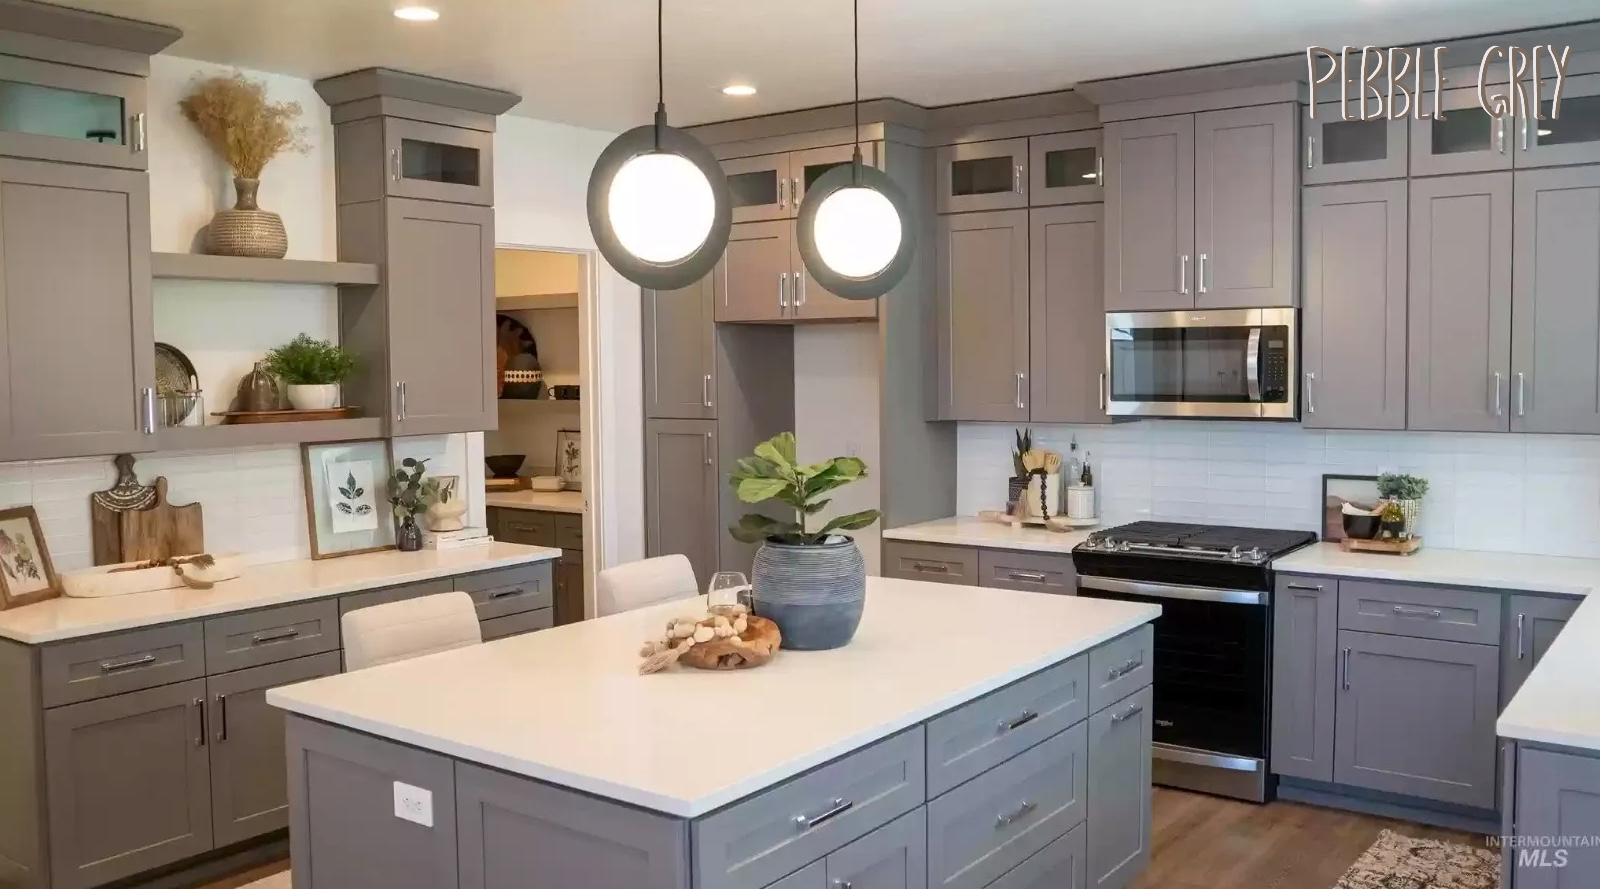 pebble grey kitchen cabinet